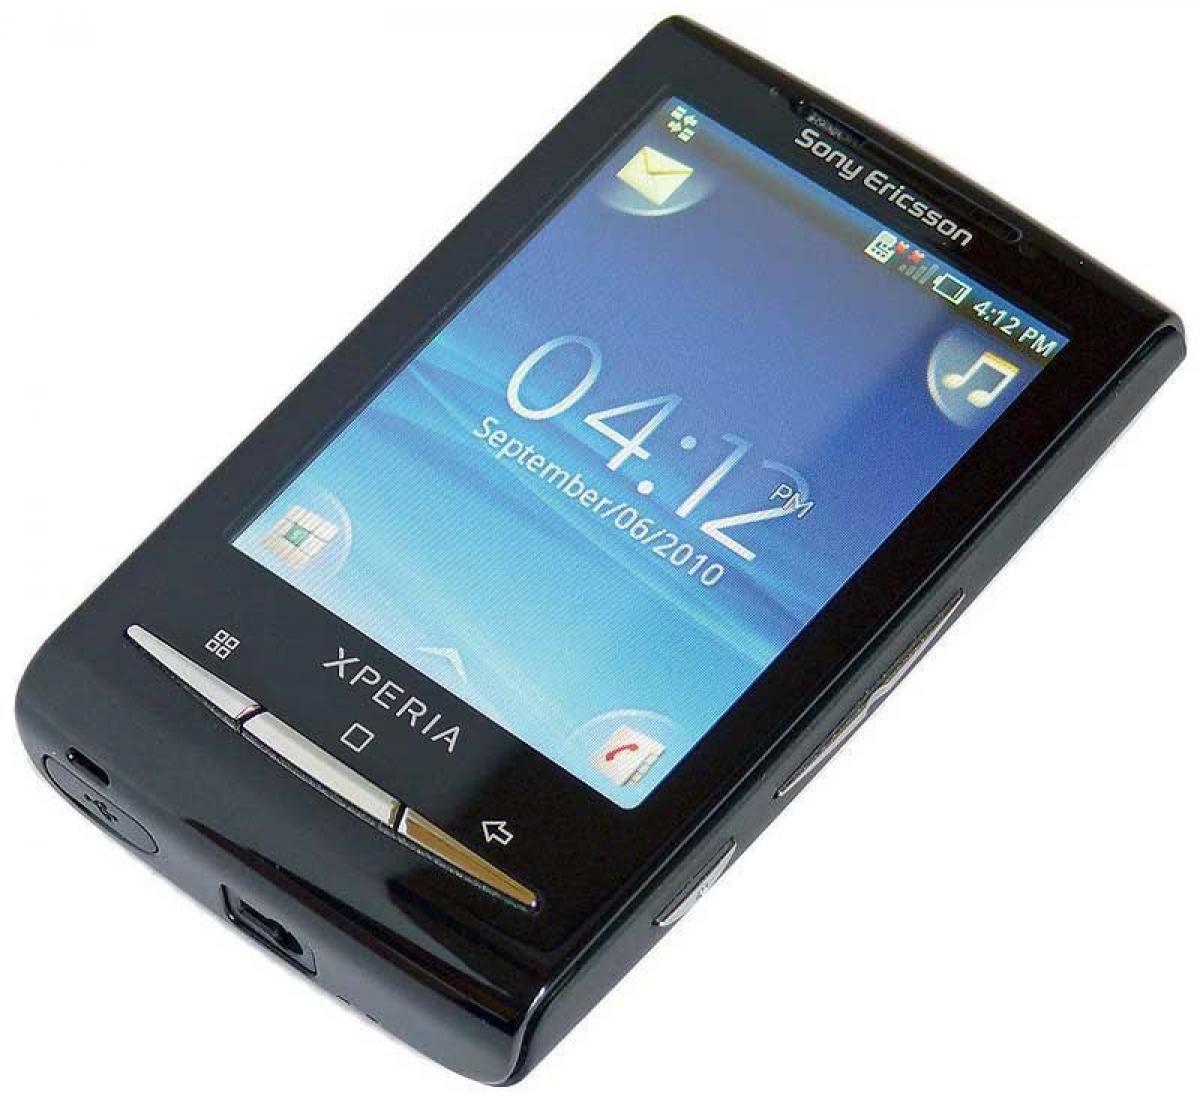 Xperia x10. Сони Эриксон Xperia x10. Смартфон Sony Ericsson Xperia x10. Sony Xperia x10 Mini. Сони Эриксон иксперия 10.